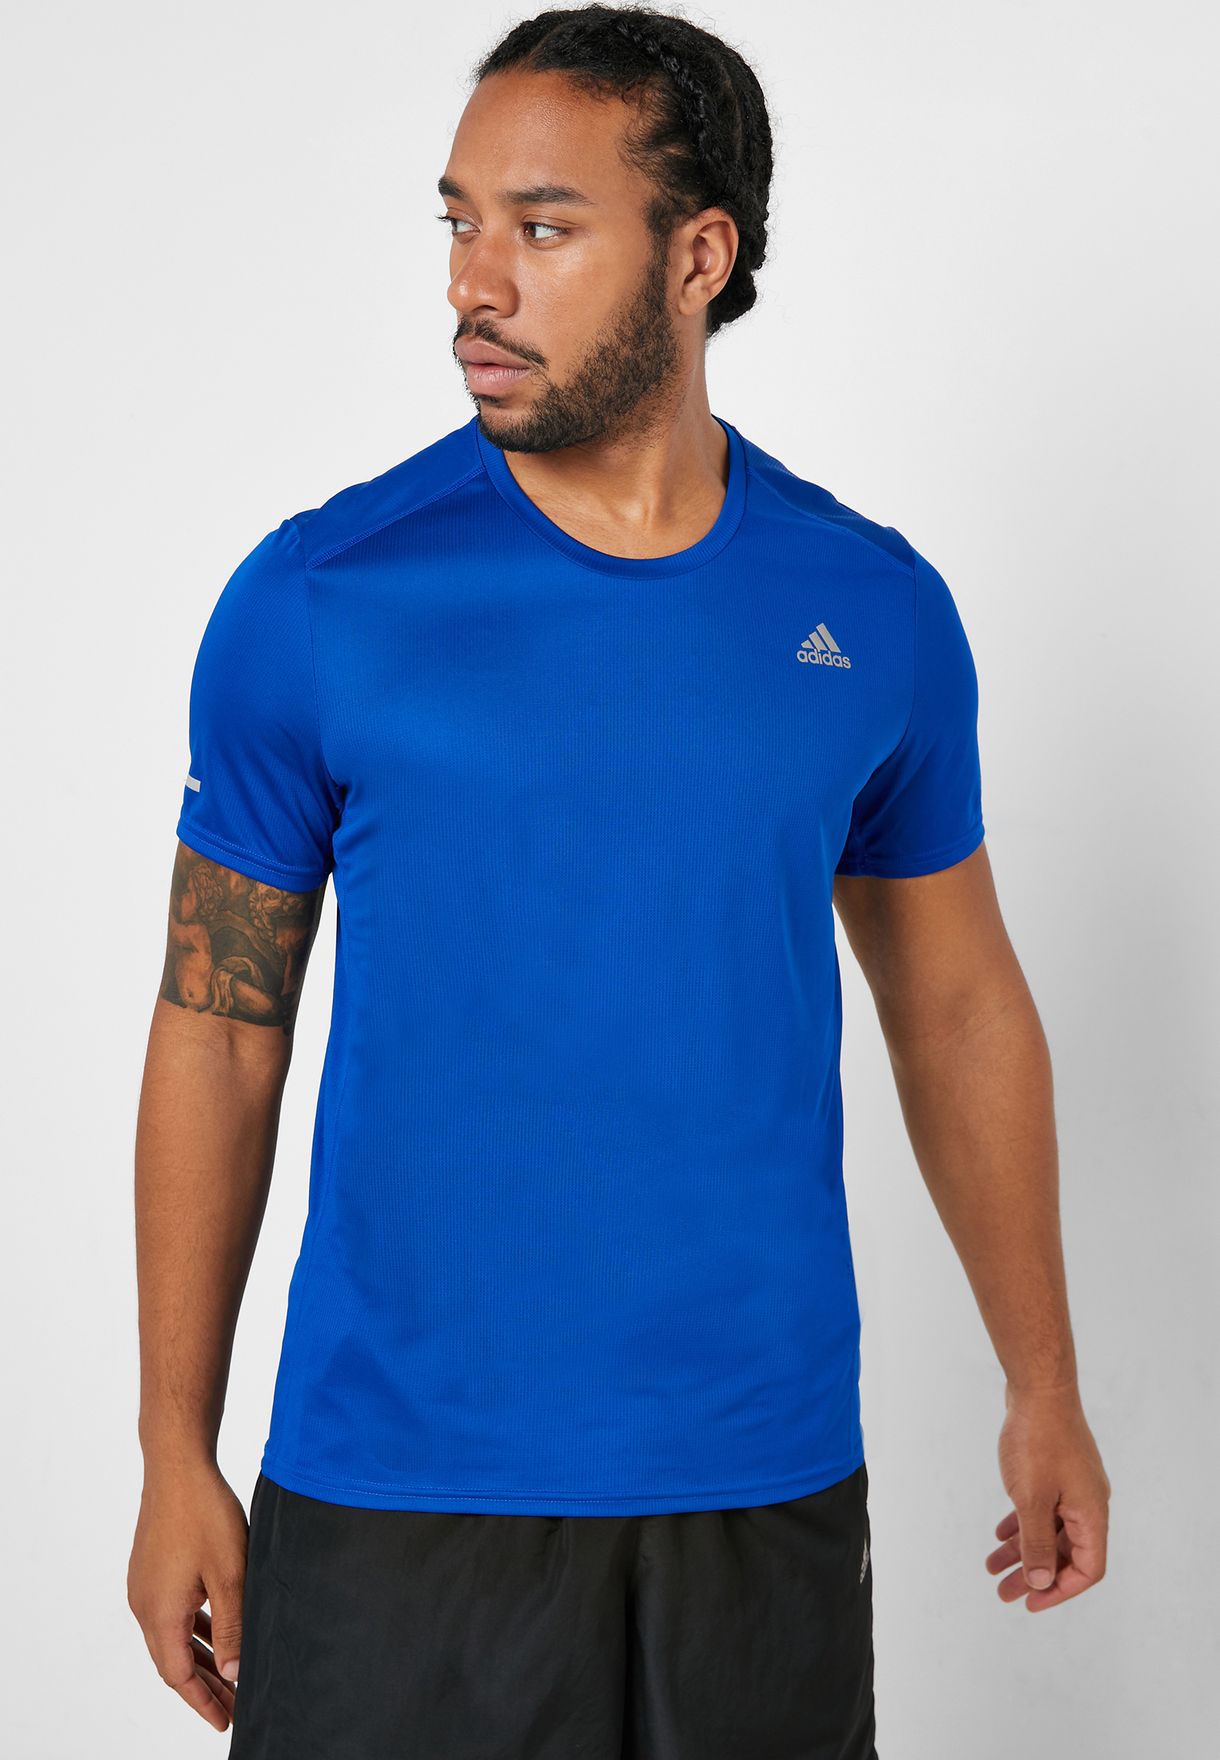 adidas blue t shirt